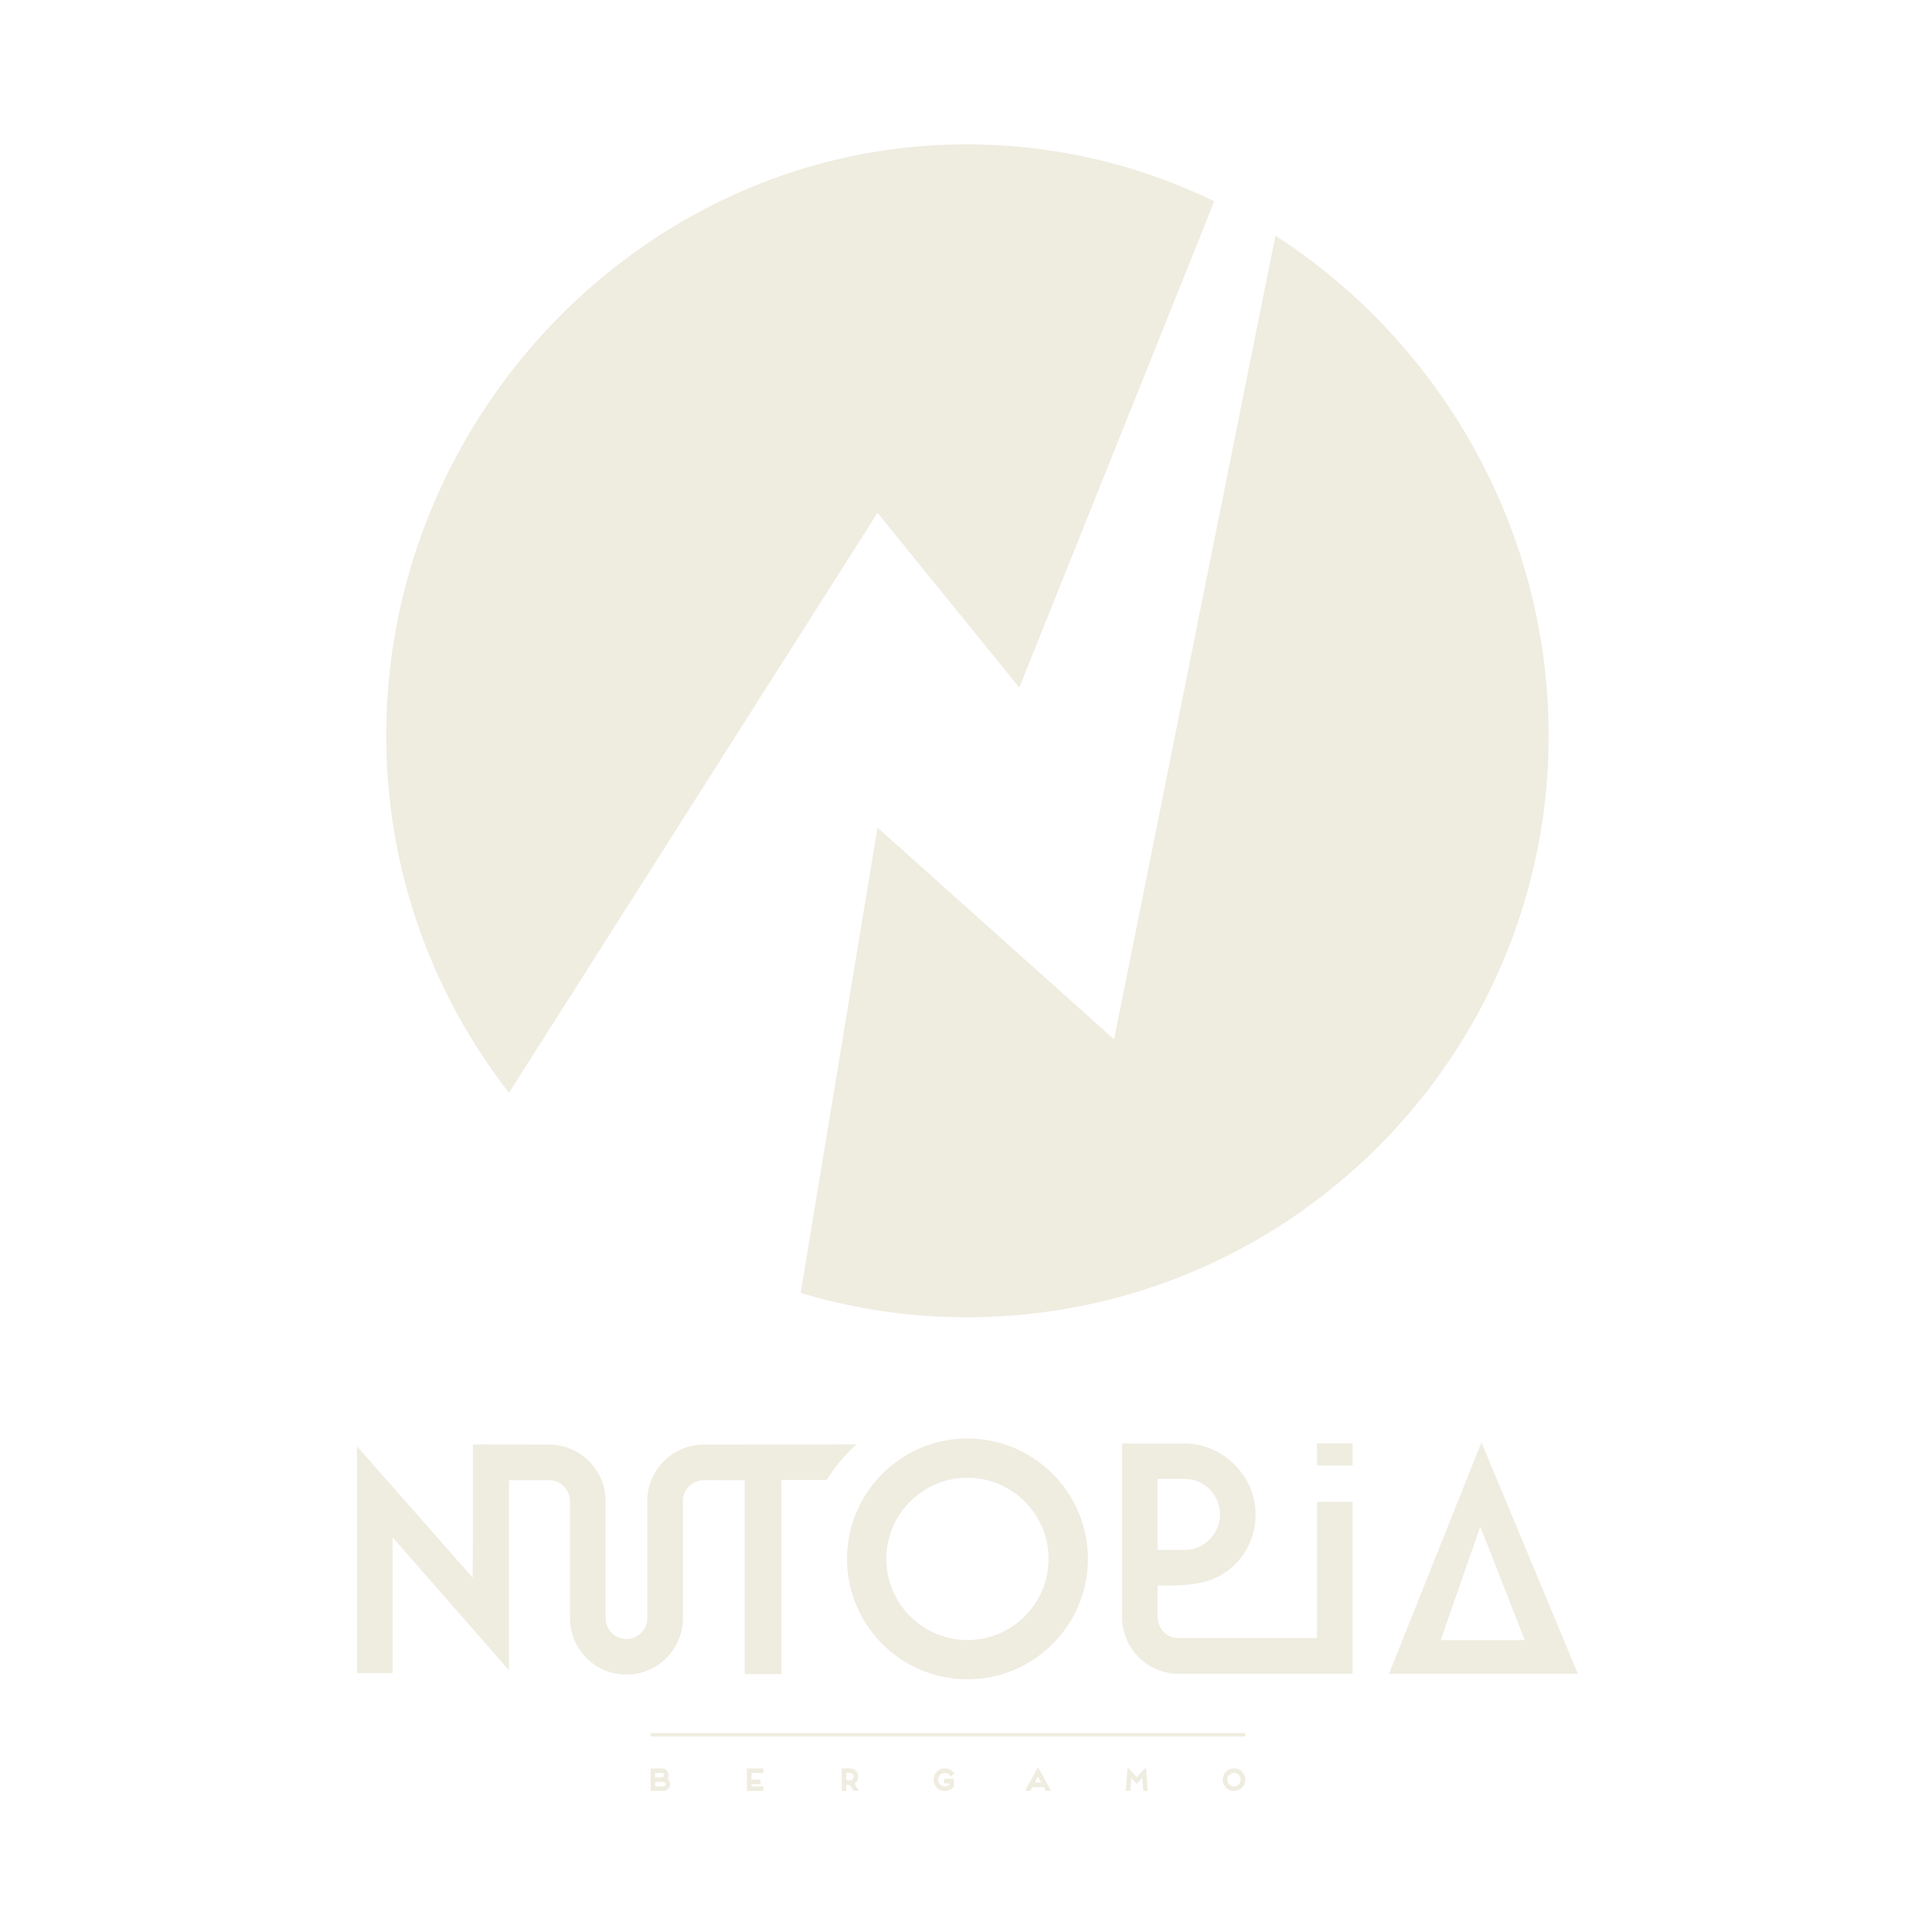 Nutopia srl - Bergamo